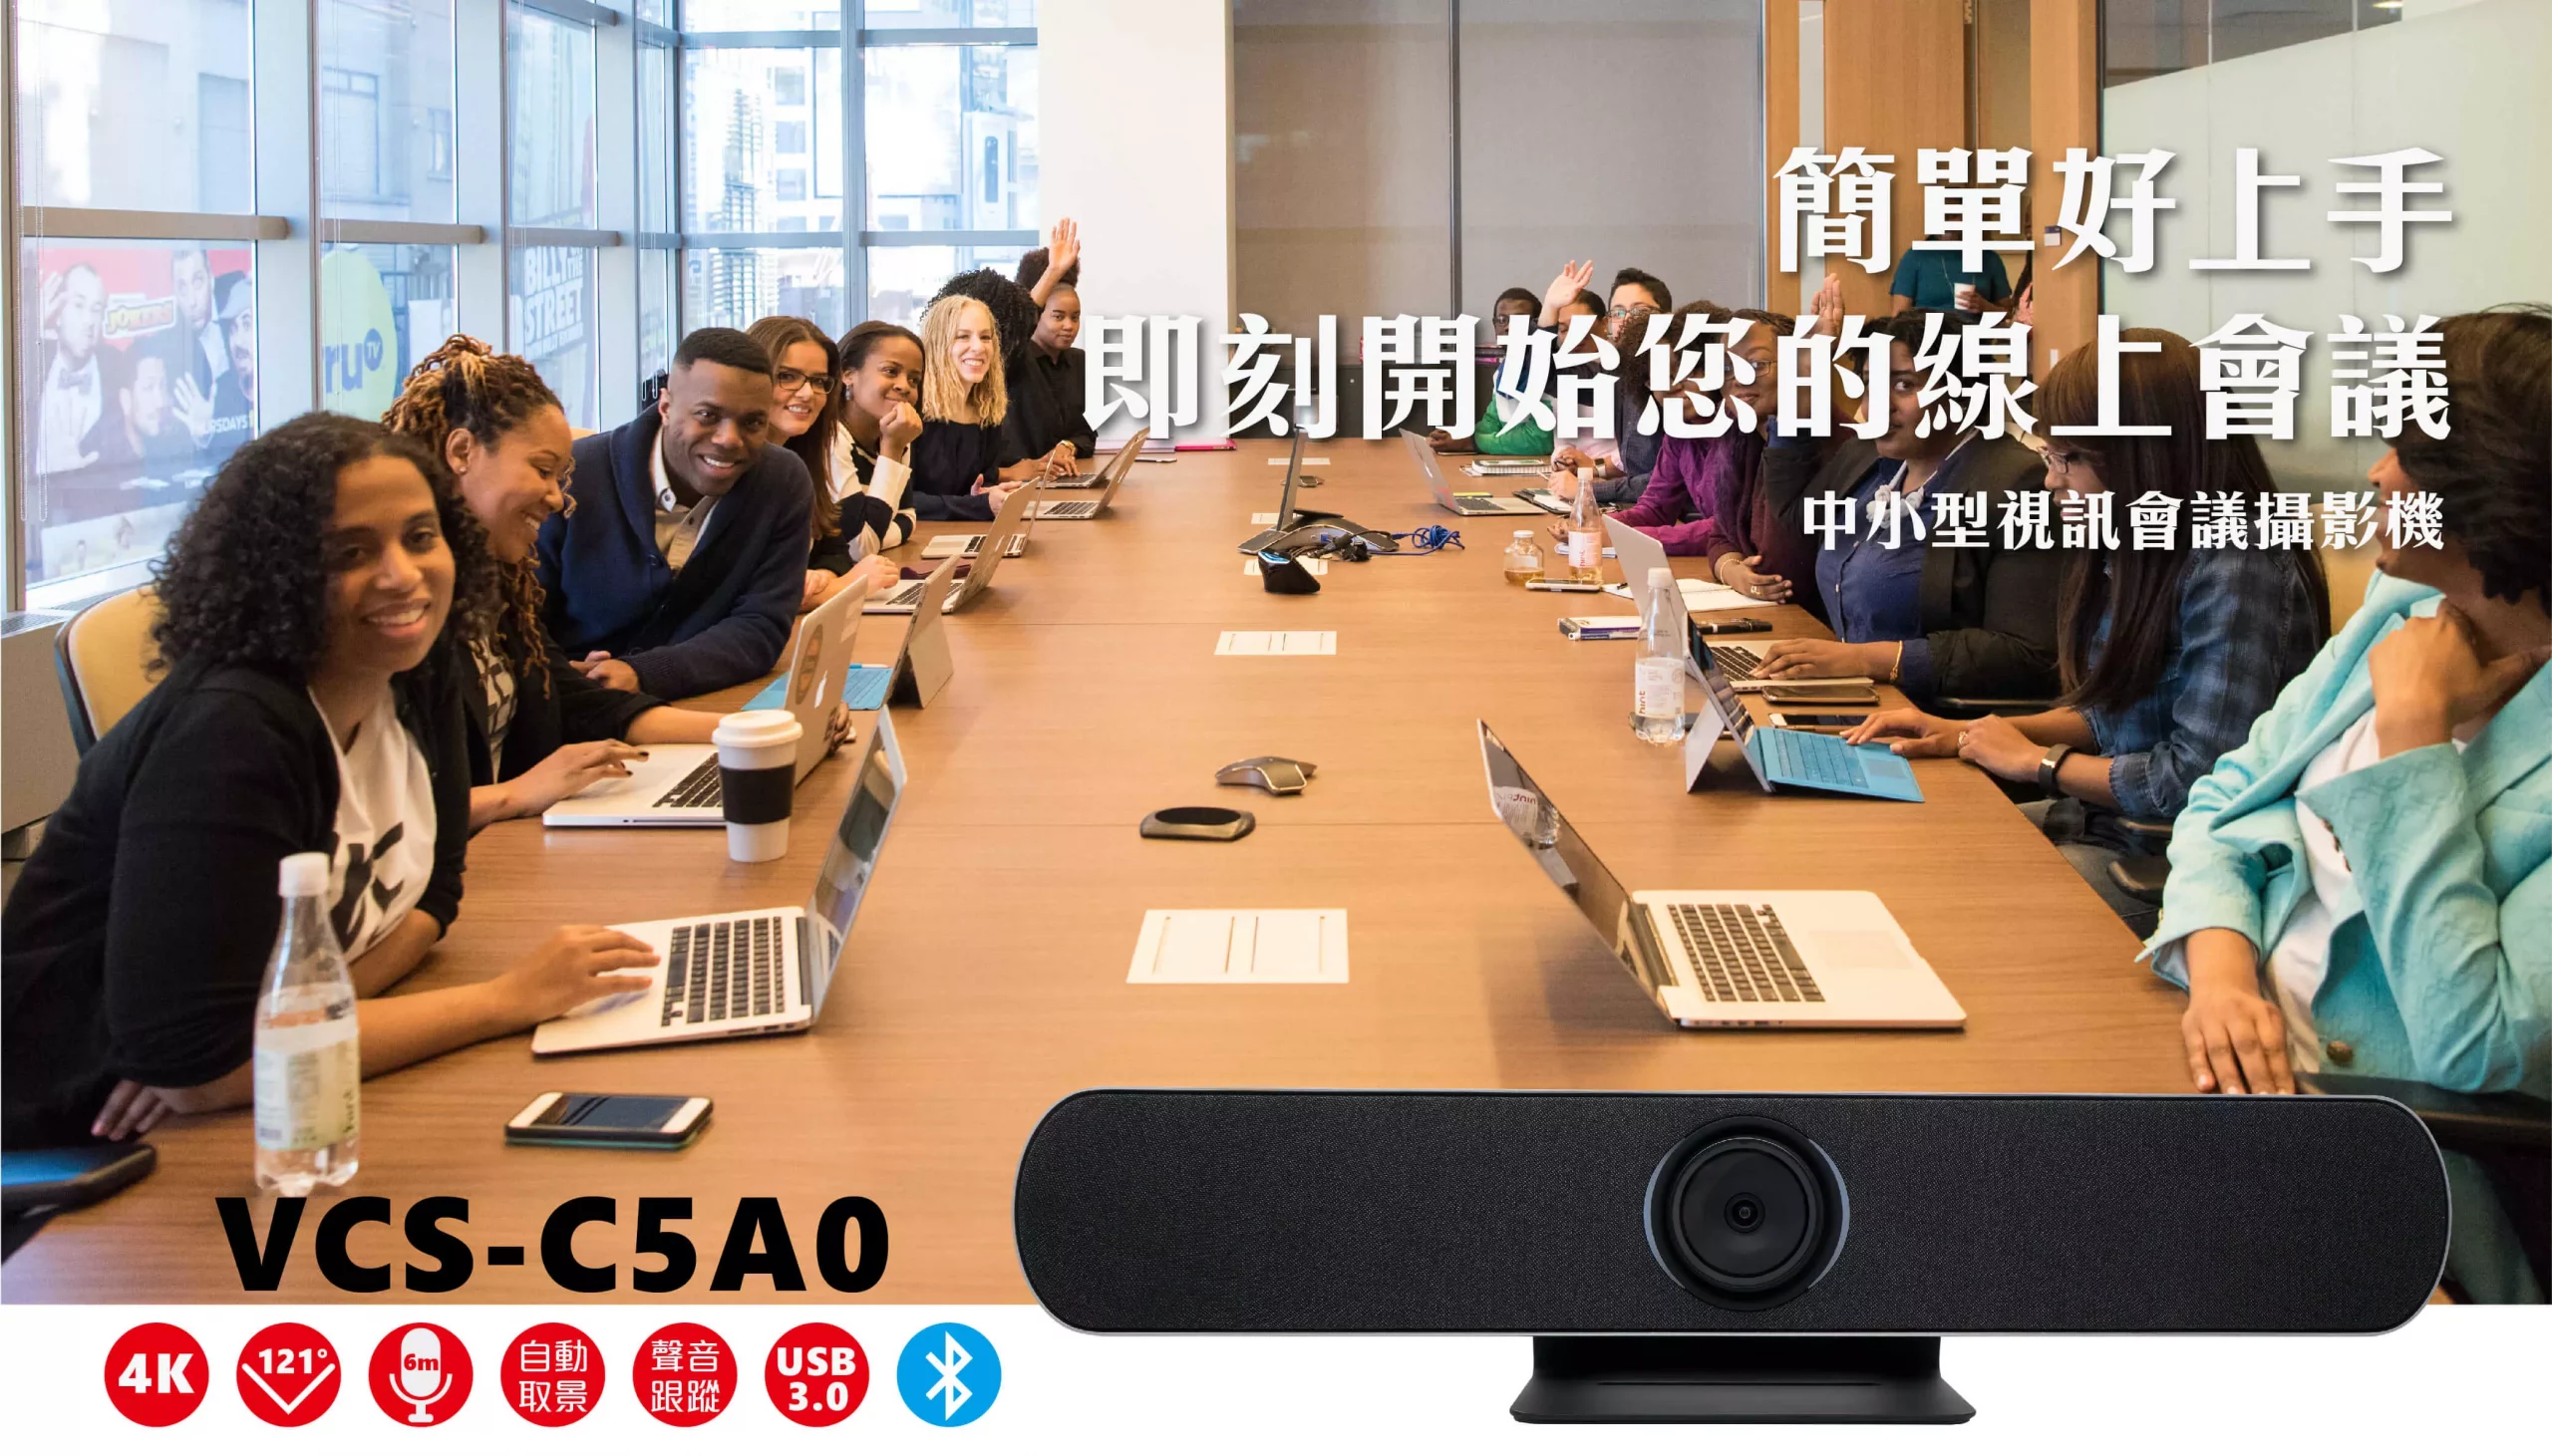 VCS-C5A0 中小型會議視訊攝影機